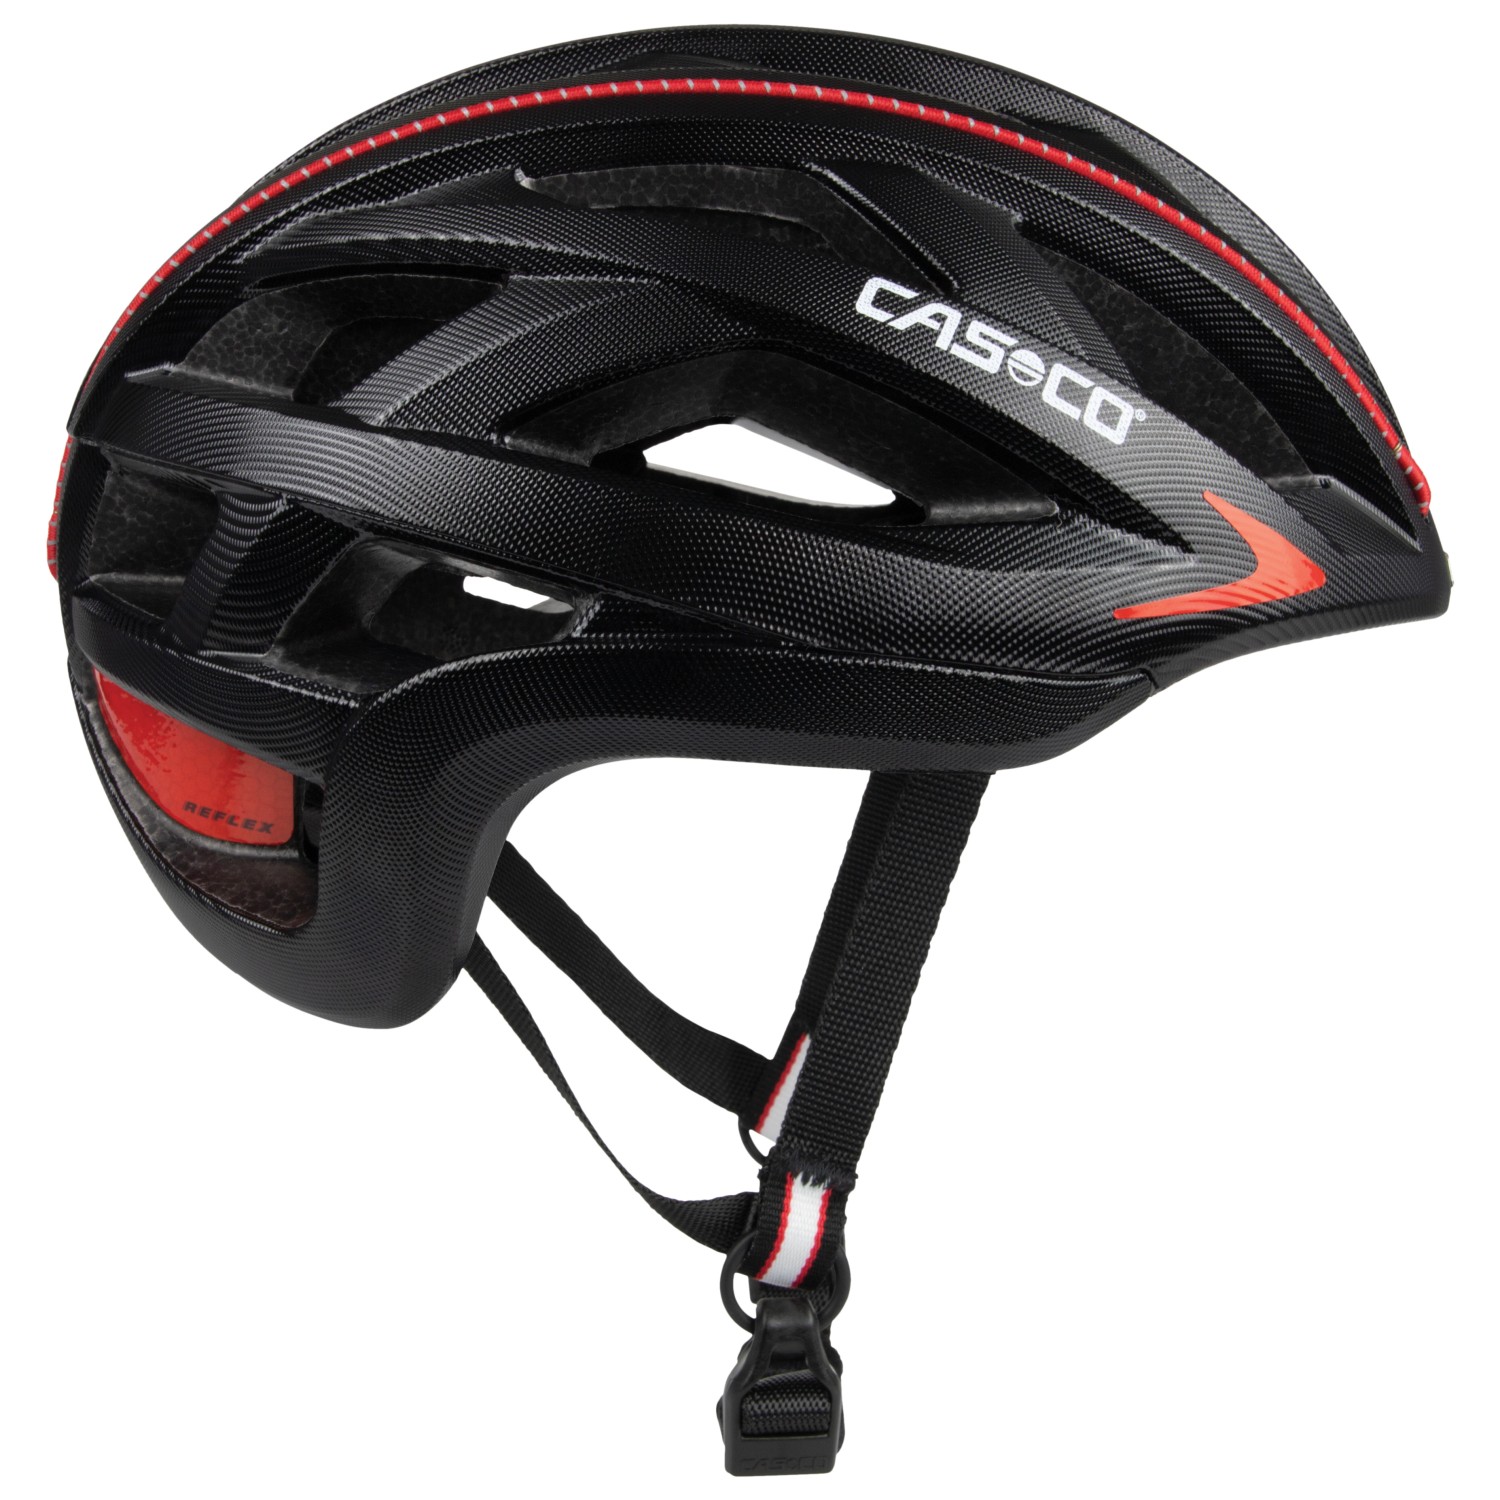 Велосипедный шлем Casco Cuda 2 Strada, цвет Black Structured шлем casco cuda 2